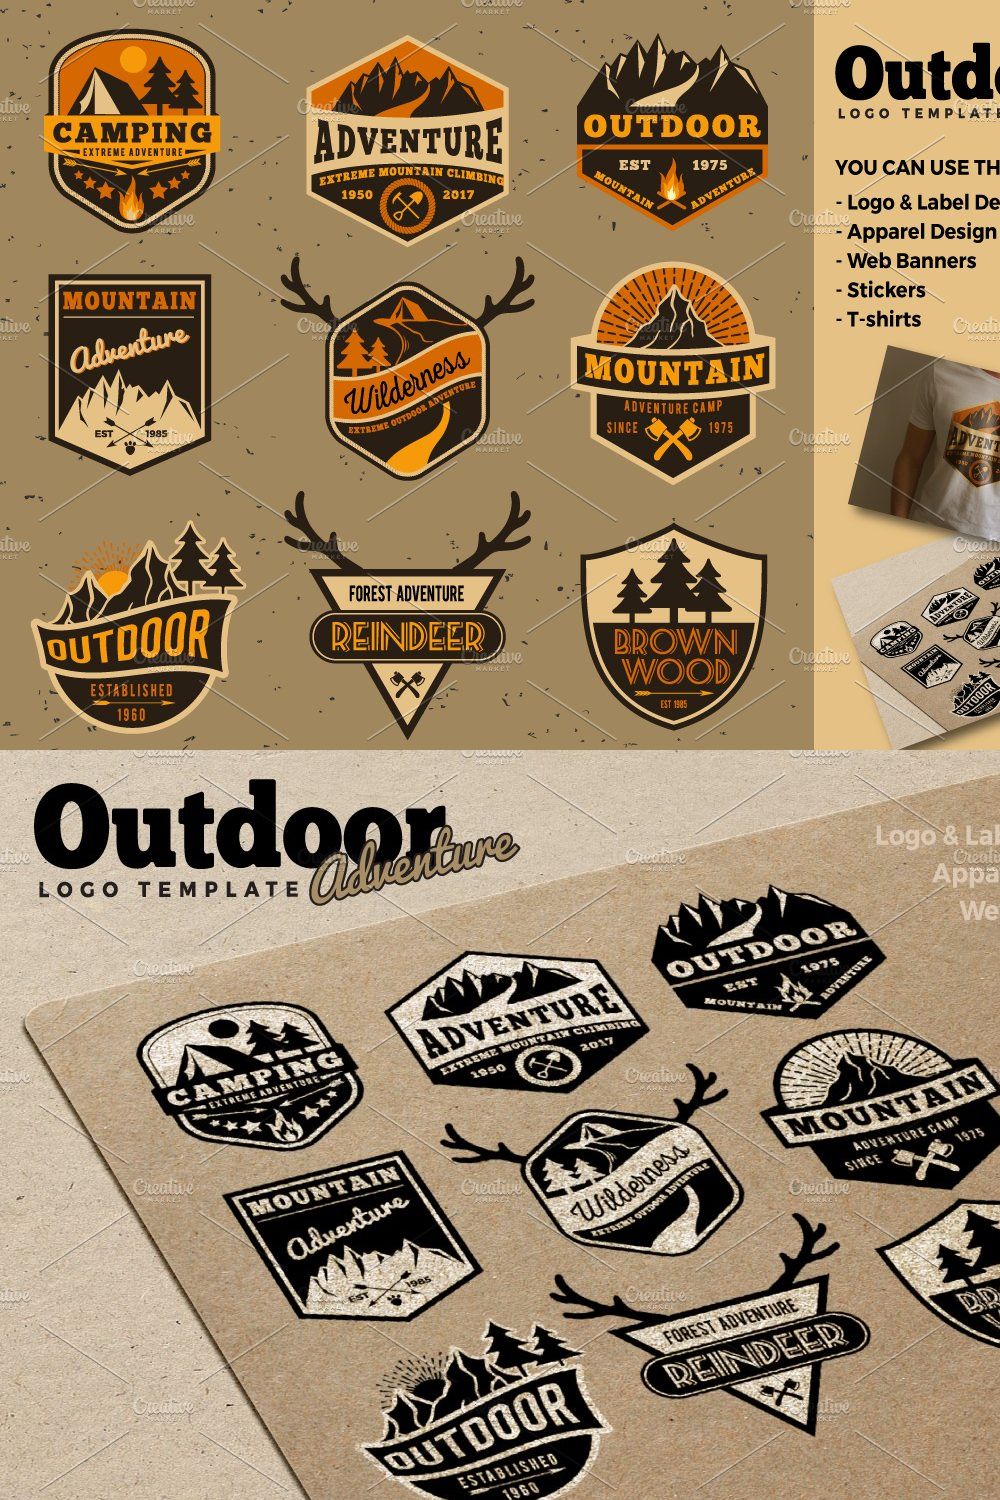 Outdoor Adventure Logo Templates pinterest preview image.